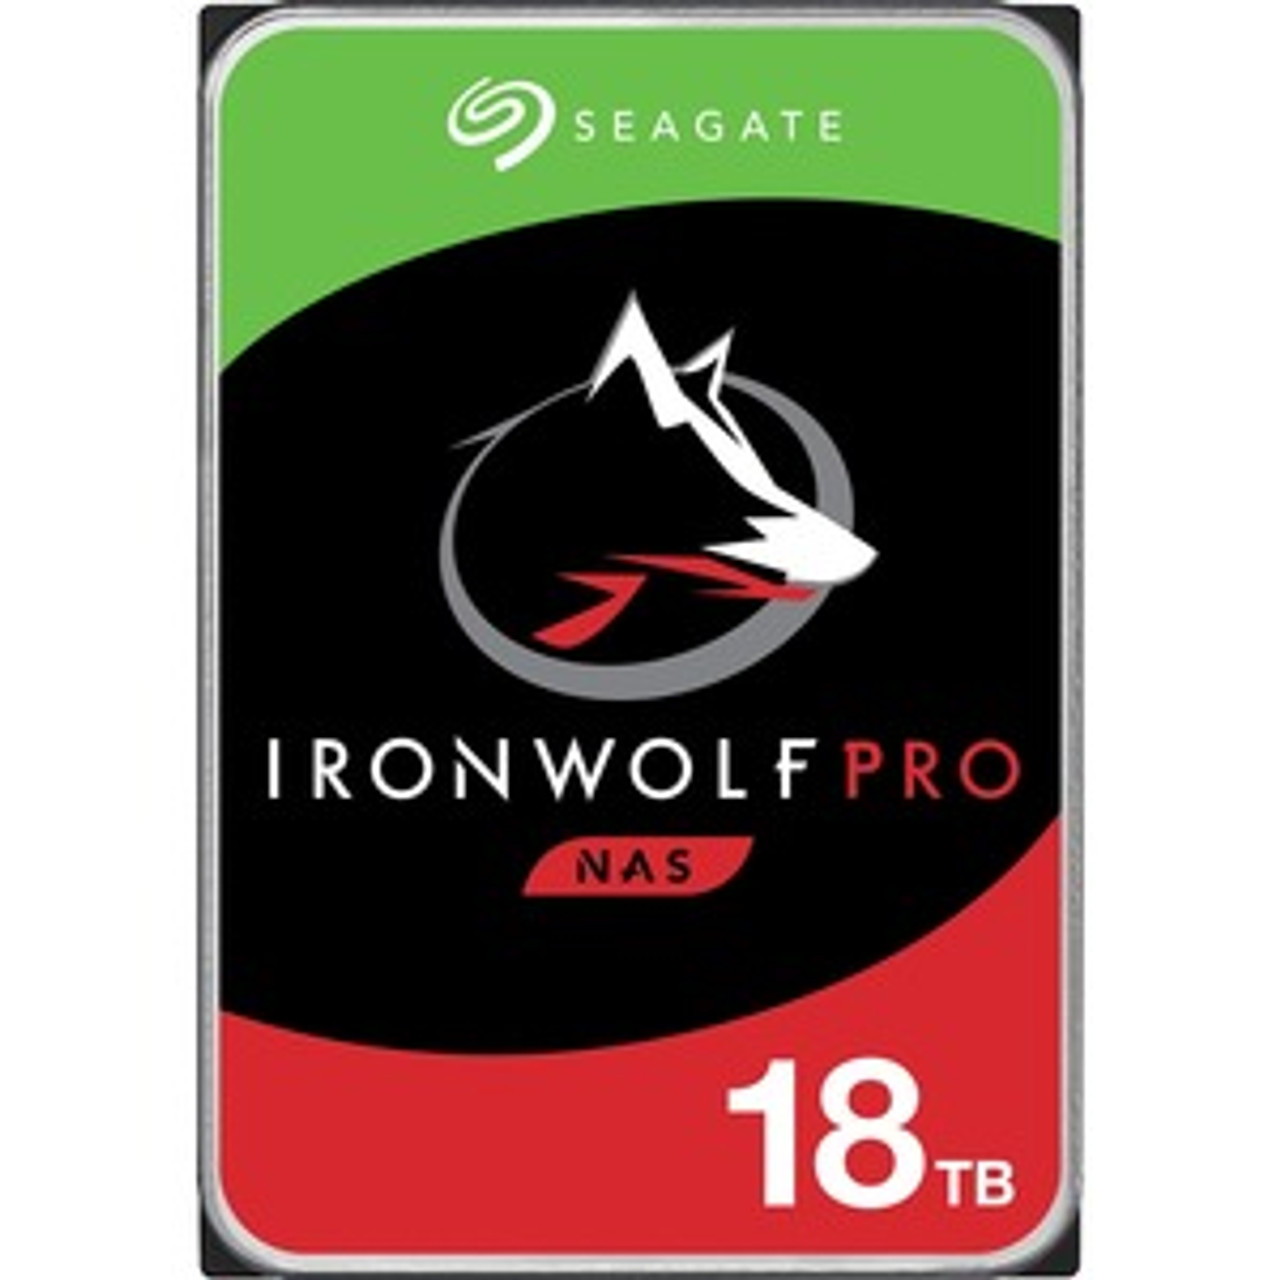 Seagate IronWolf Pro NAS 18TB 7200RPM SATA 6Gbps 256MB Cache (512e) 3.5-inch Internal Hard Drive (20-Pack) Mfr P/N ST18000NE000-20PK